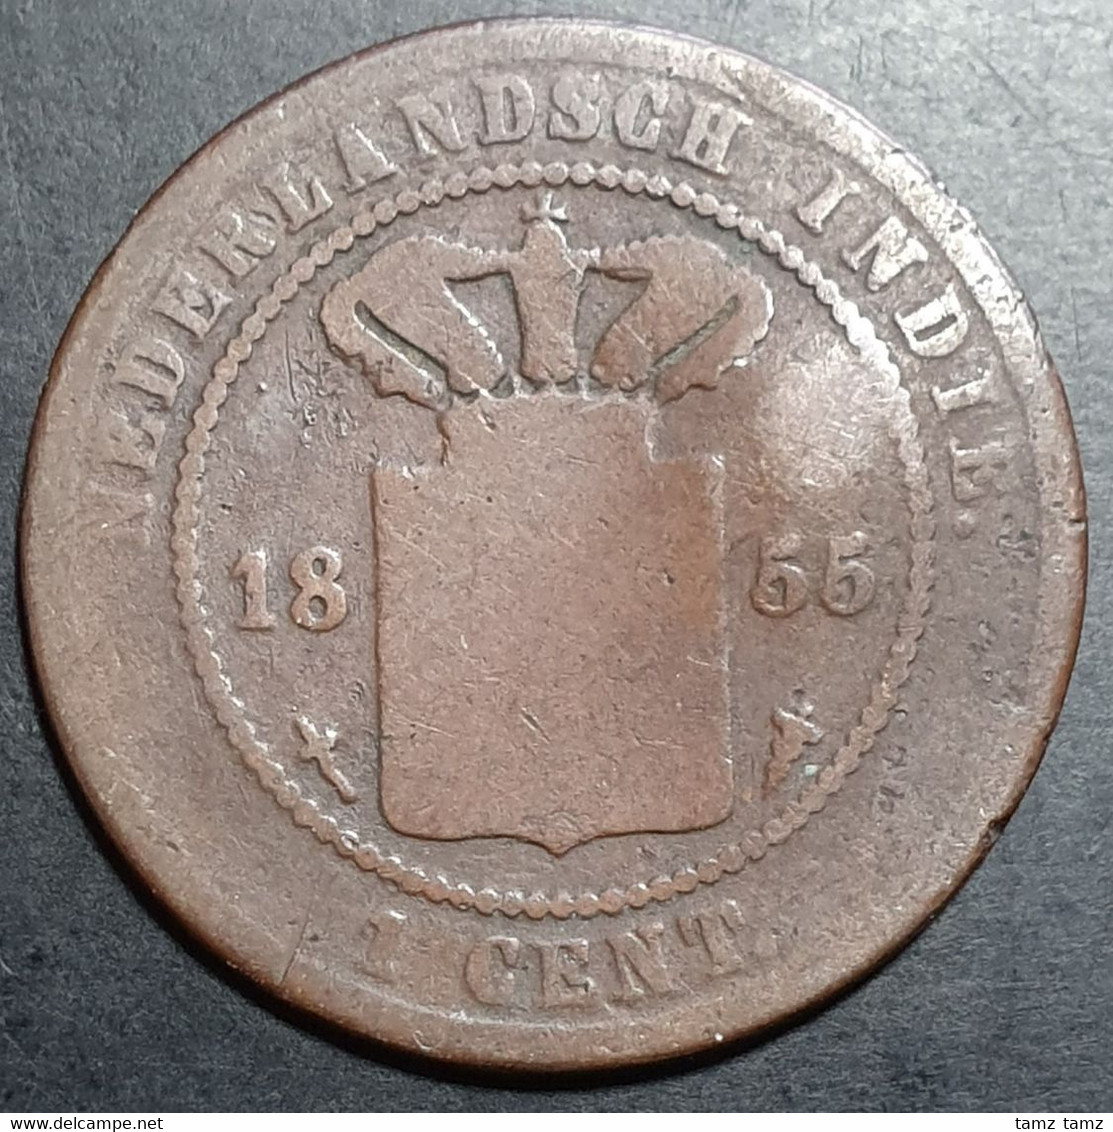 Netherlands East Indies Indonesia 1 Cent 1855 KEYDATE Mintage Only 100,000 Pcs - Indes Neerlandesas